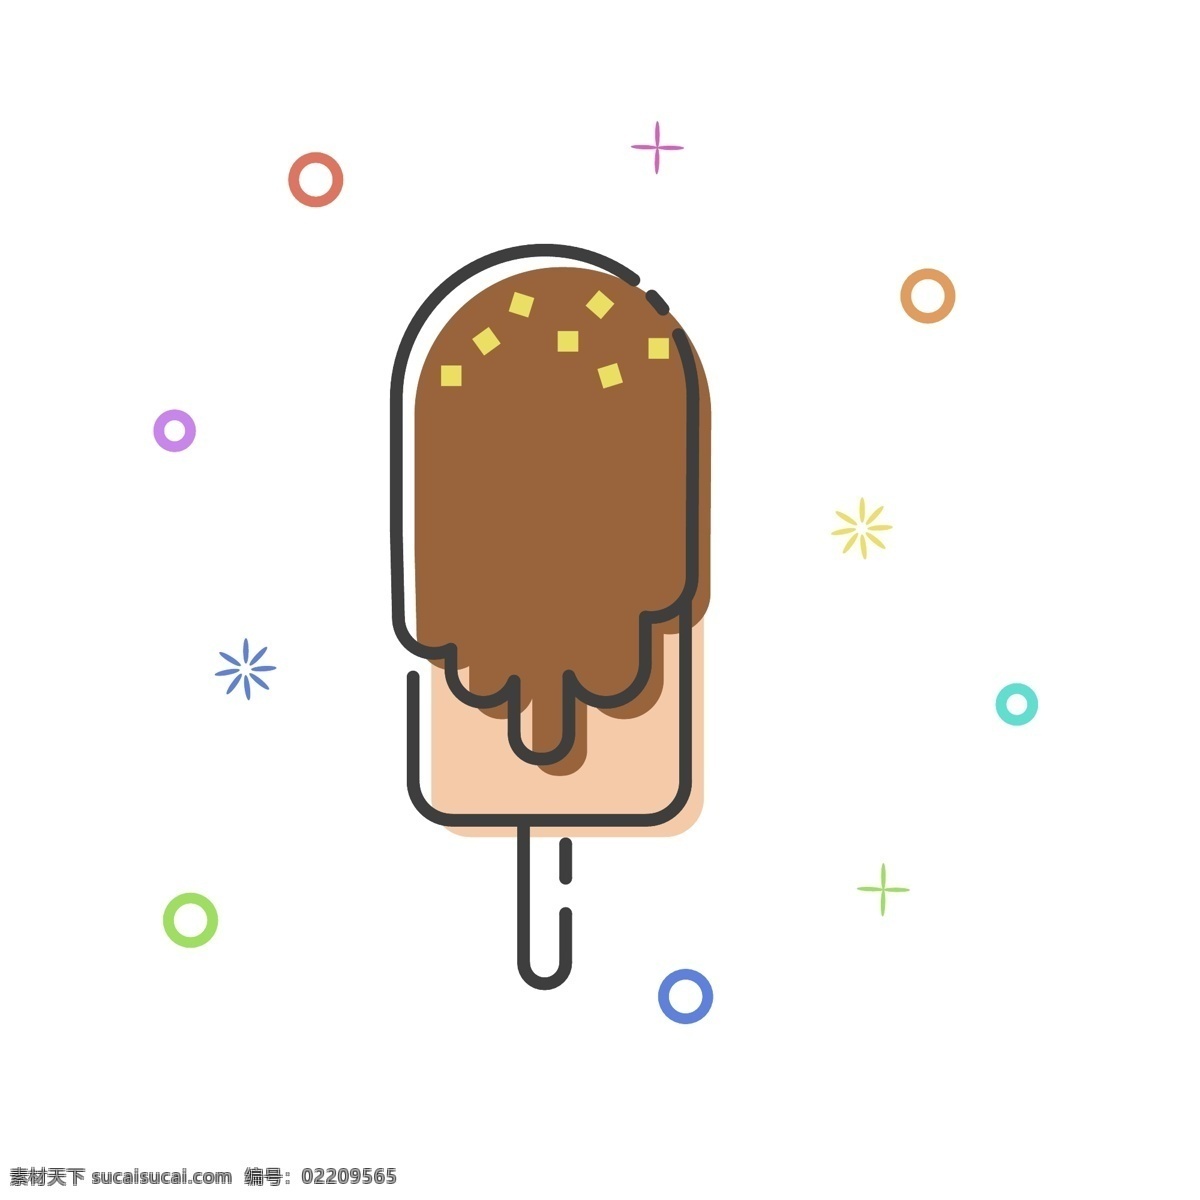 meb 卡通 美食 冰棍 冰淇淋 图标素材 矢量 元素 卡通图标 矢量图标 图标 冰淇淋图标 冰棍图标 可爱图标 meb冰淇淋 meb图标